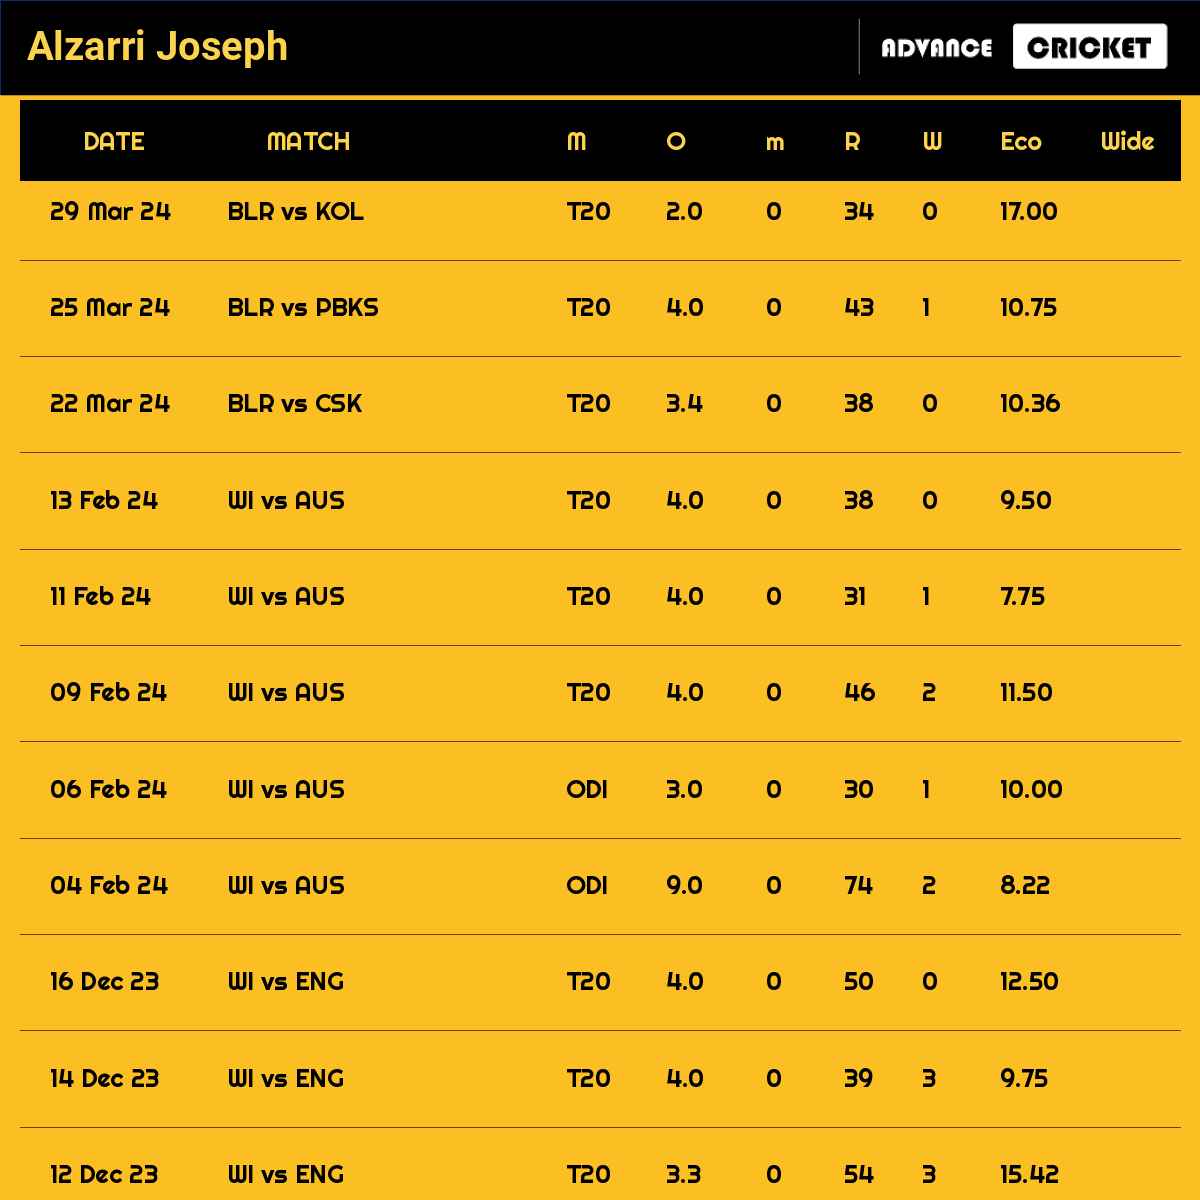 Alzarri Joseph recent matches